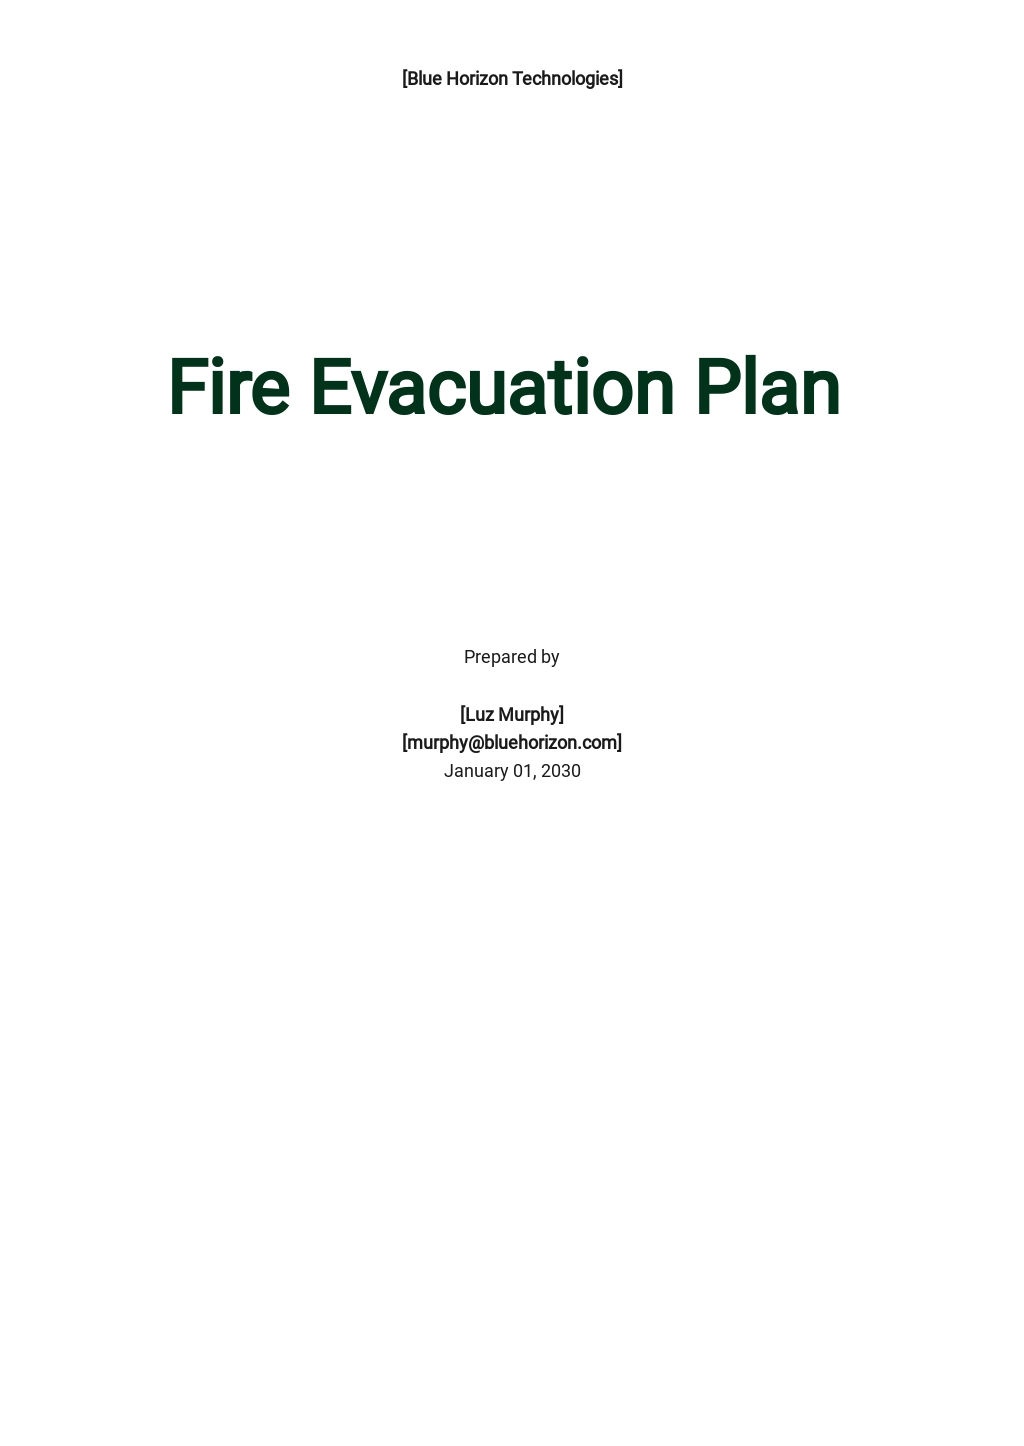 Fire Evacuation Plan Template [Free PDF] Word (DOC) Google Docs